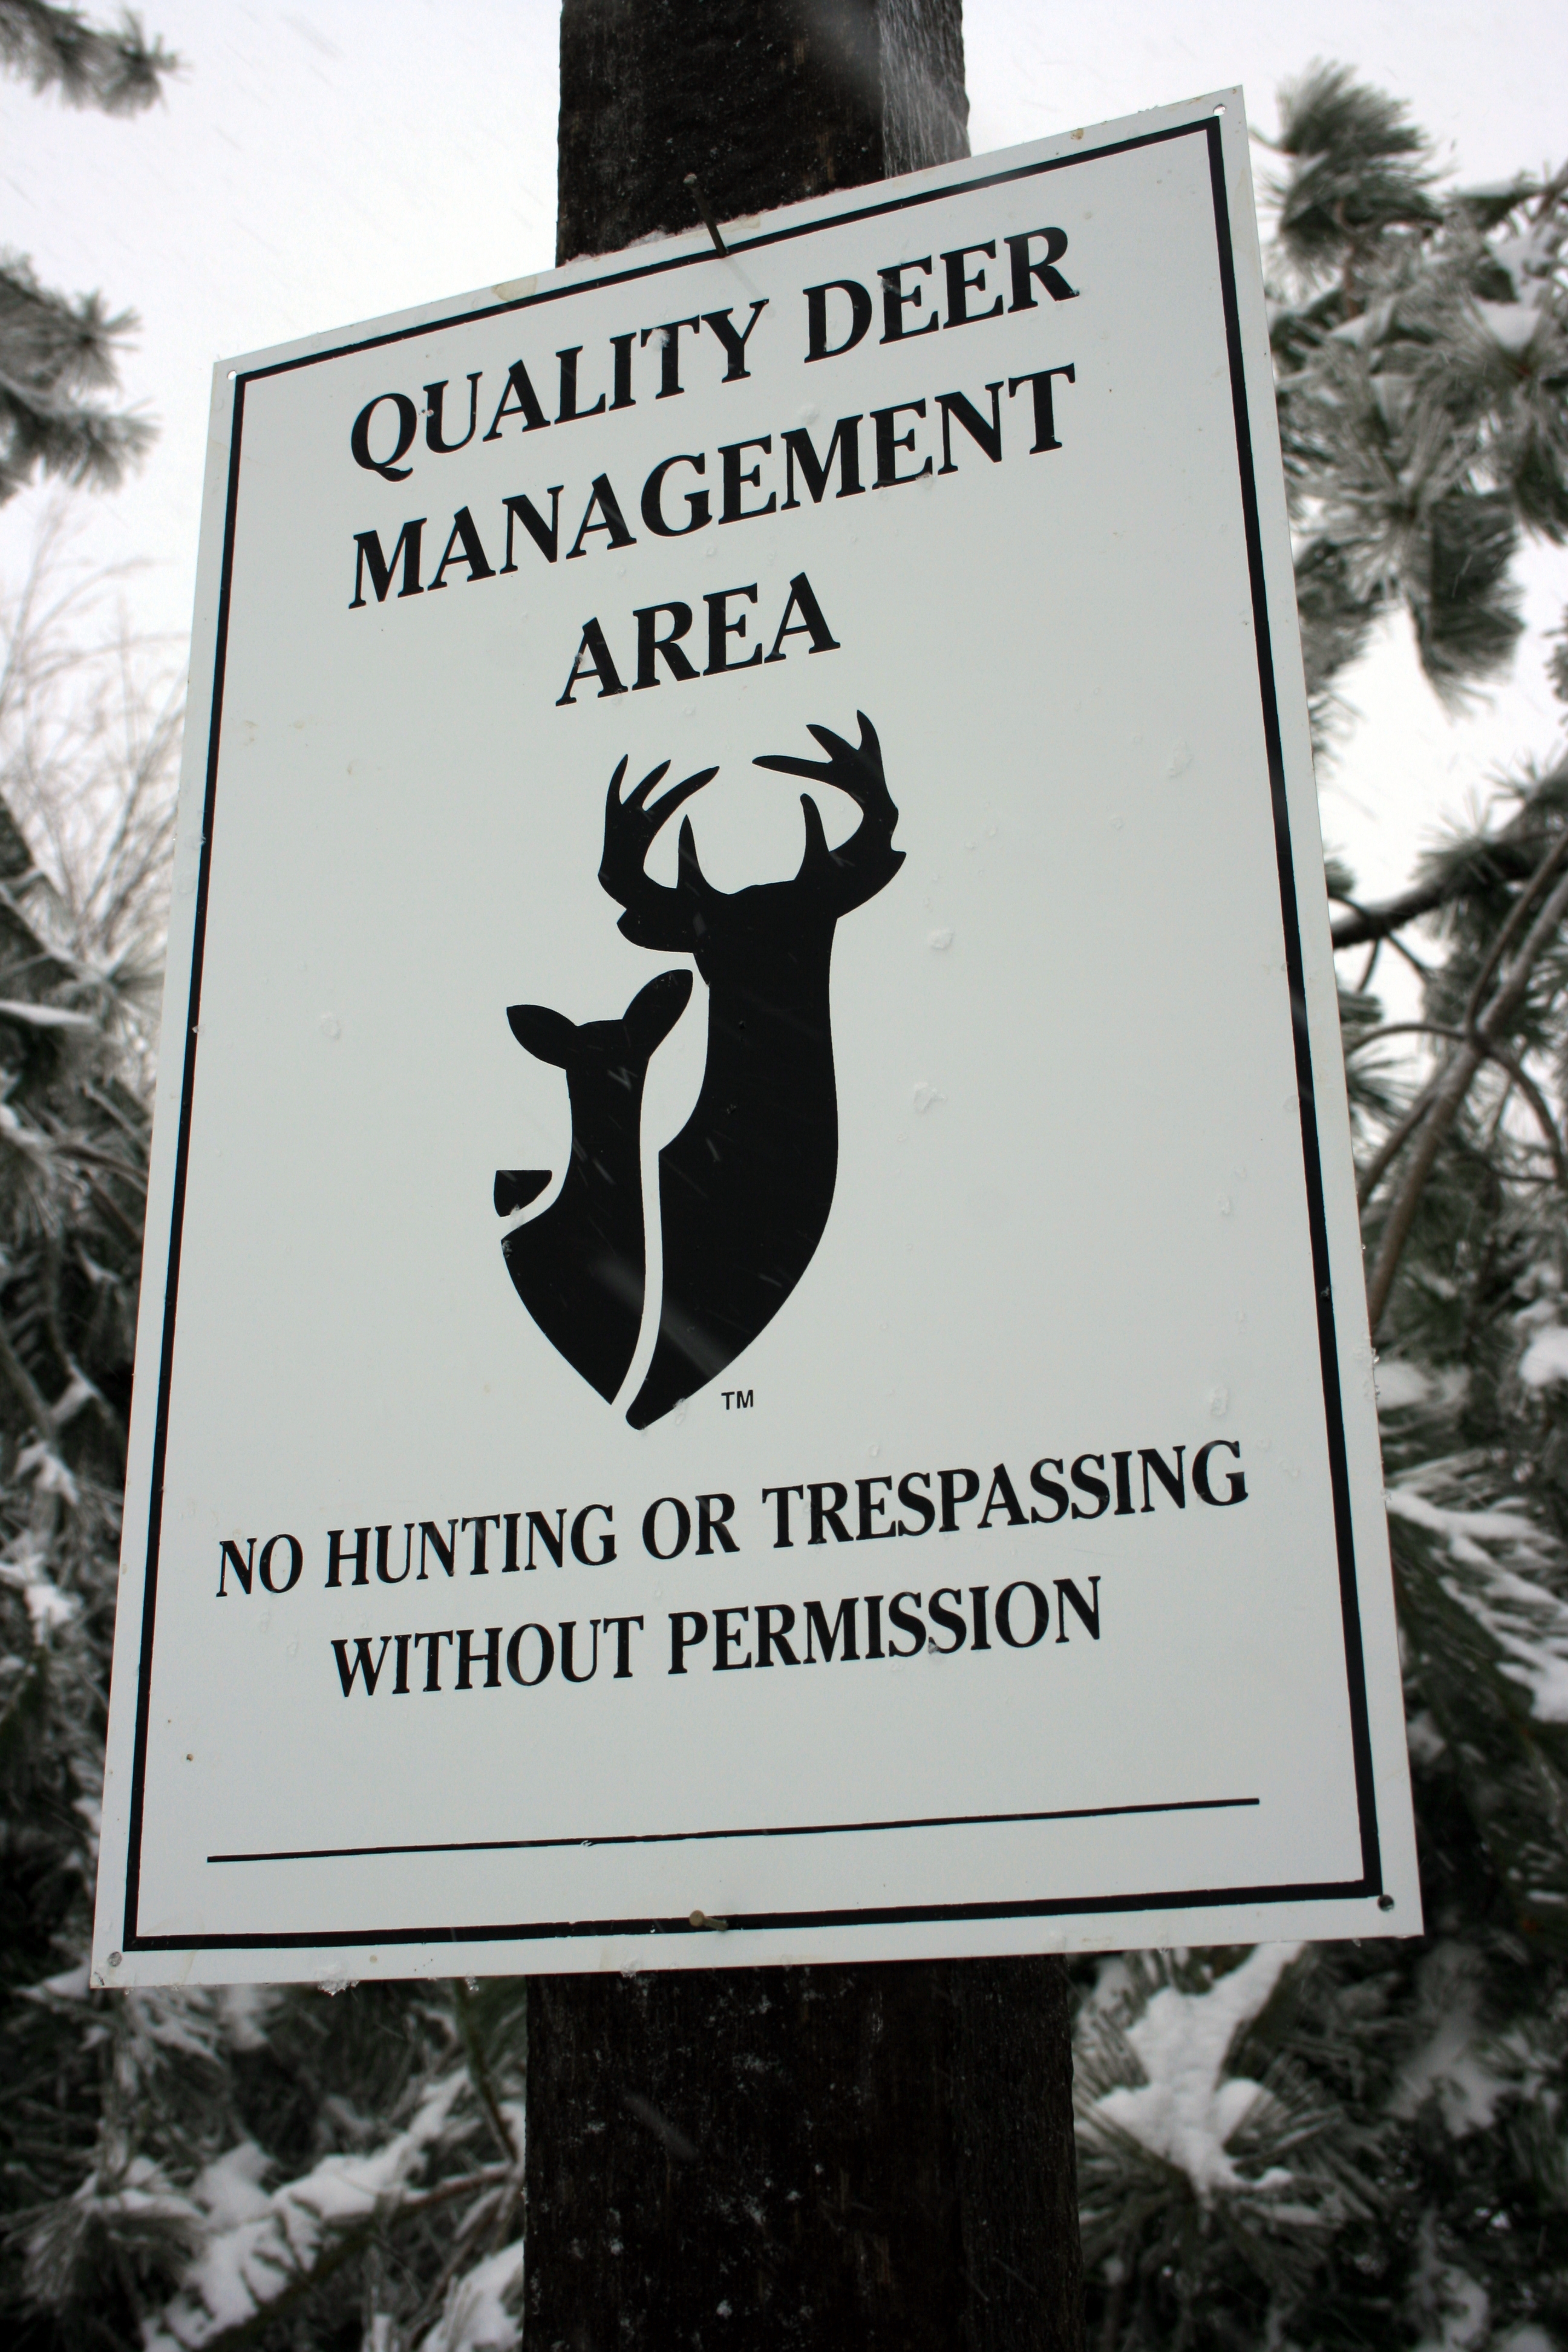 Quality Deer Management